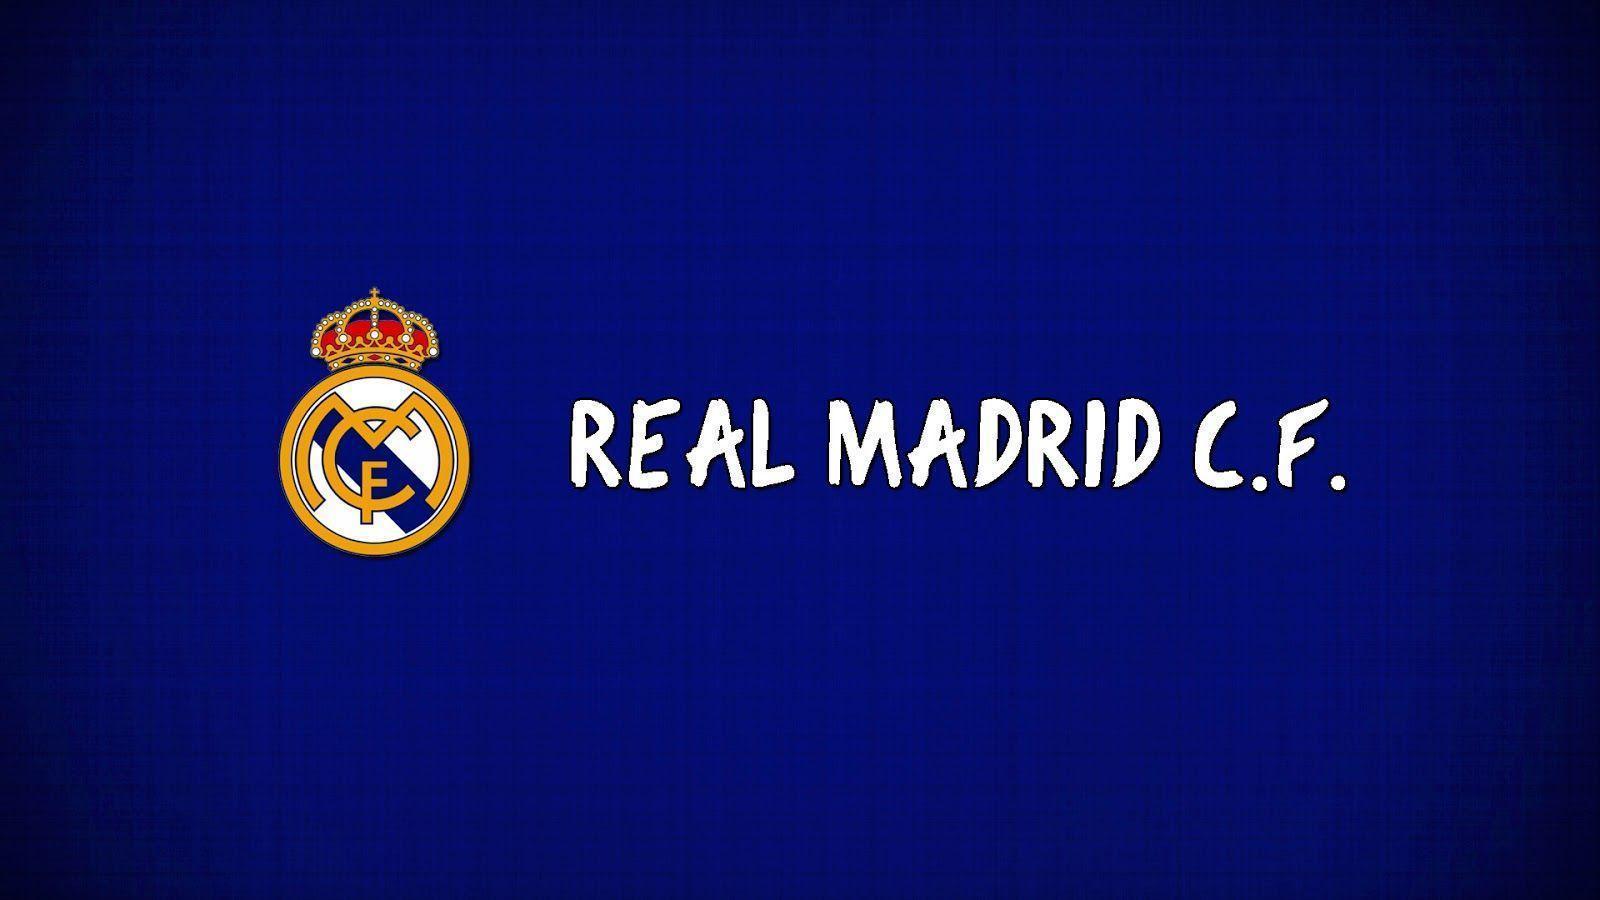 Real Madrid Logo Wallpaper HD 2016. Wallpaper, Background